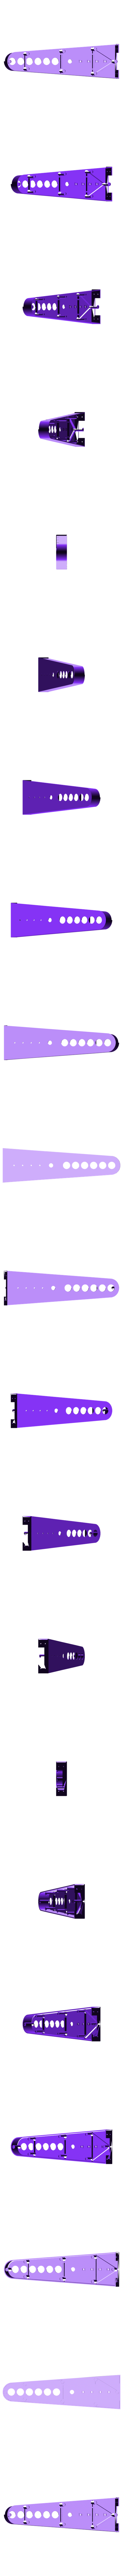 slix-neck-frame.stl Download free STL file EZ-Key MIDI Guitar • 3D print design, Adafruit